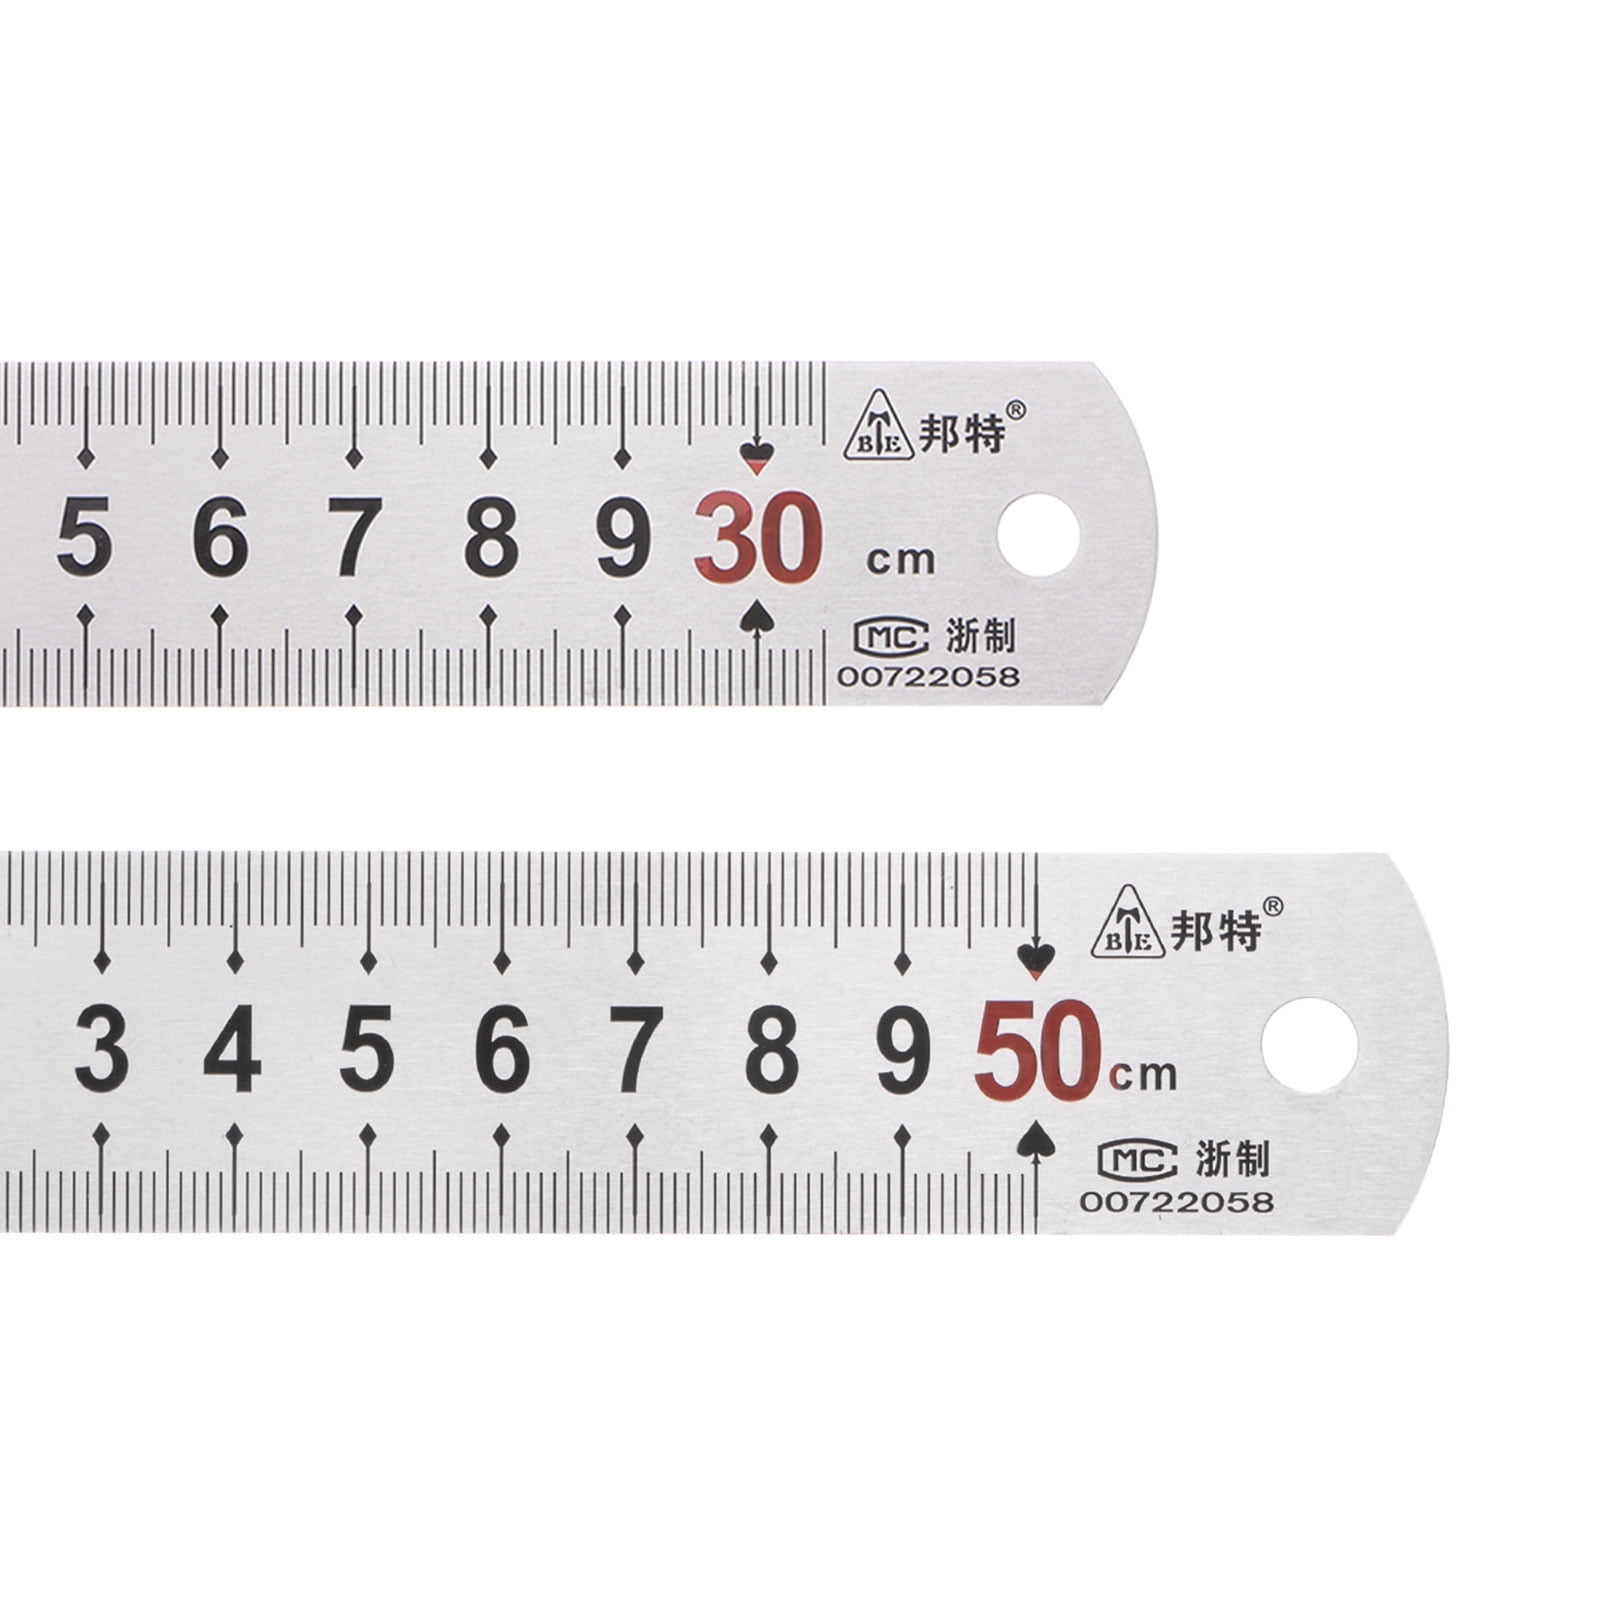 Westcott 6/15cm Inch/Metric Ruler (KT-40)